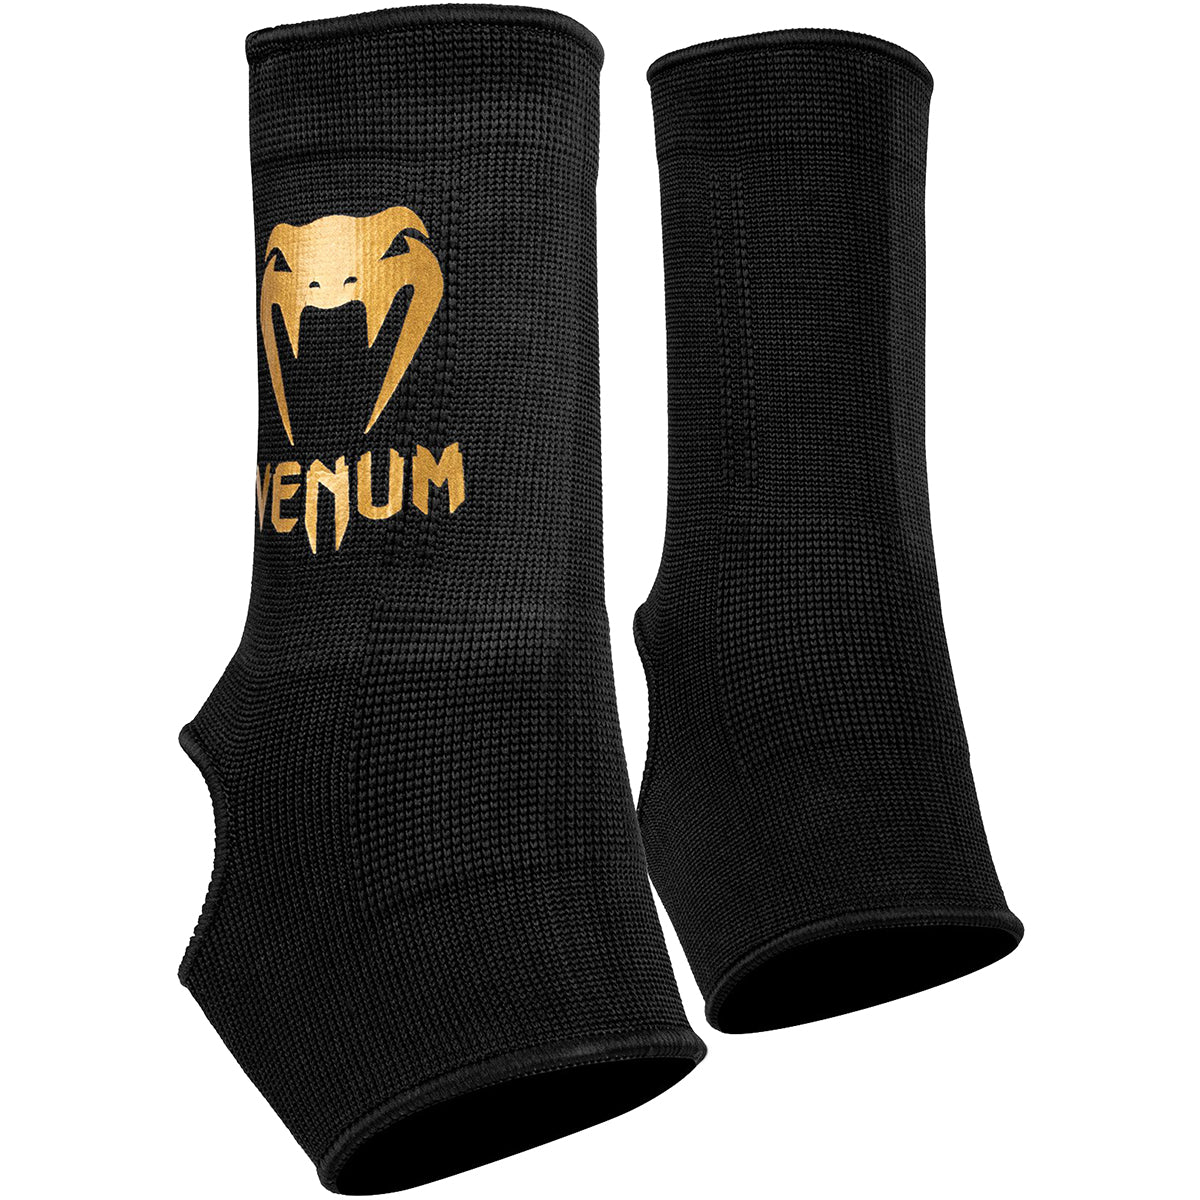 Venum Kontact Ankle Support Guards - Black/Gold Venum